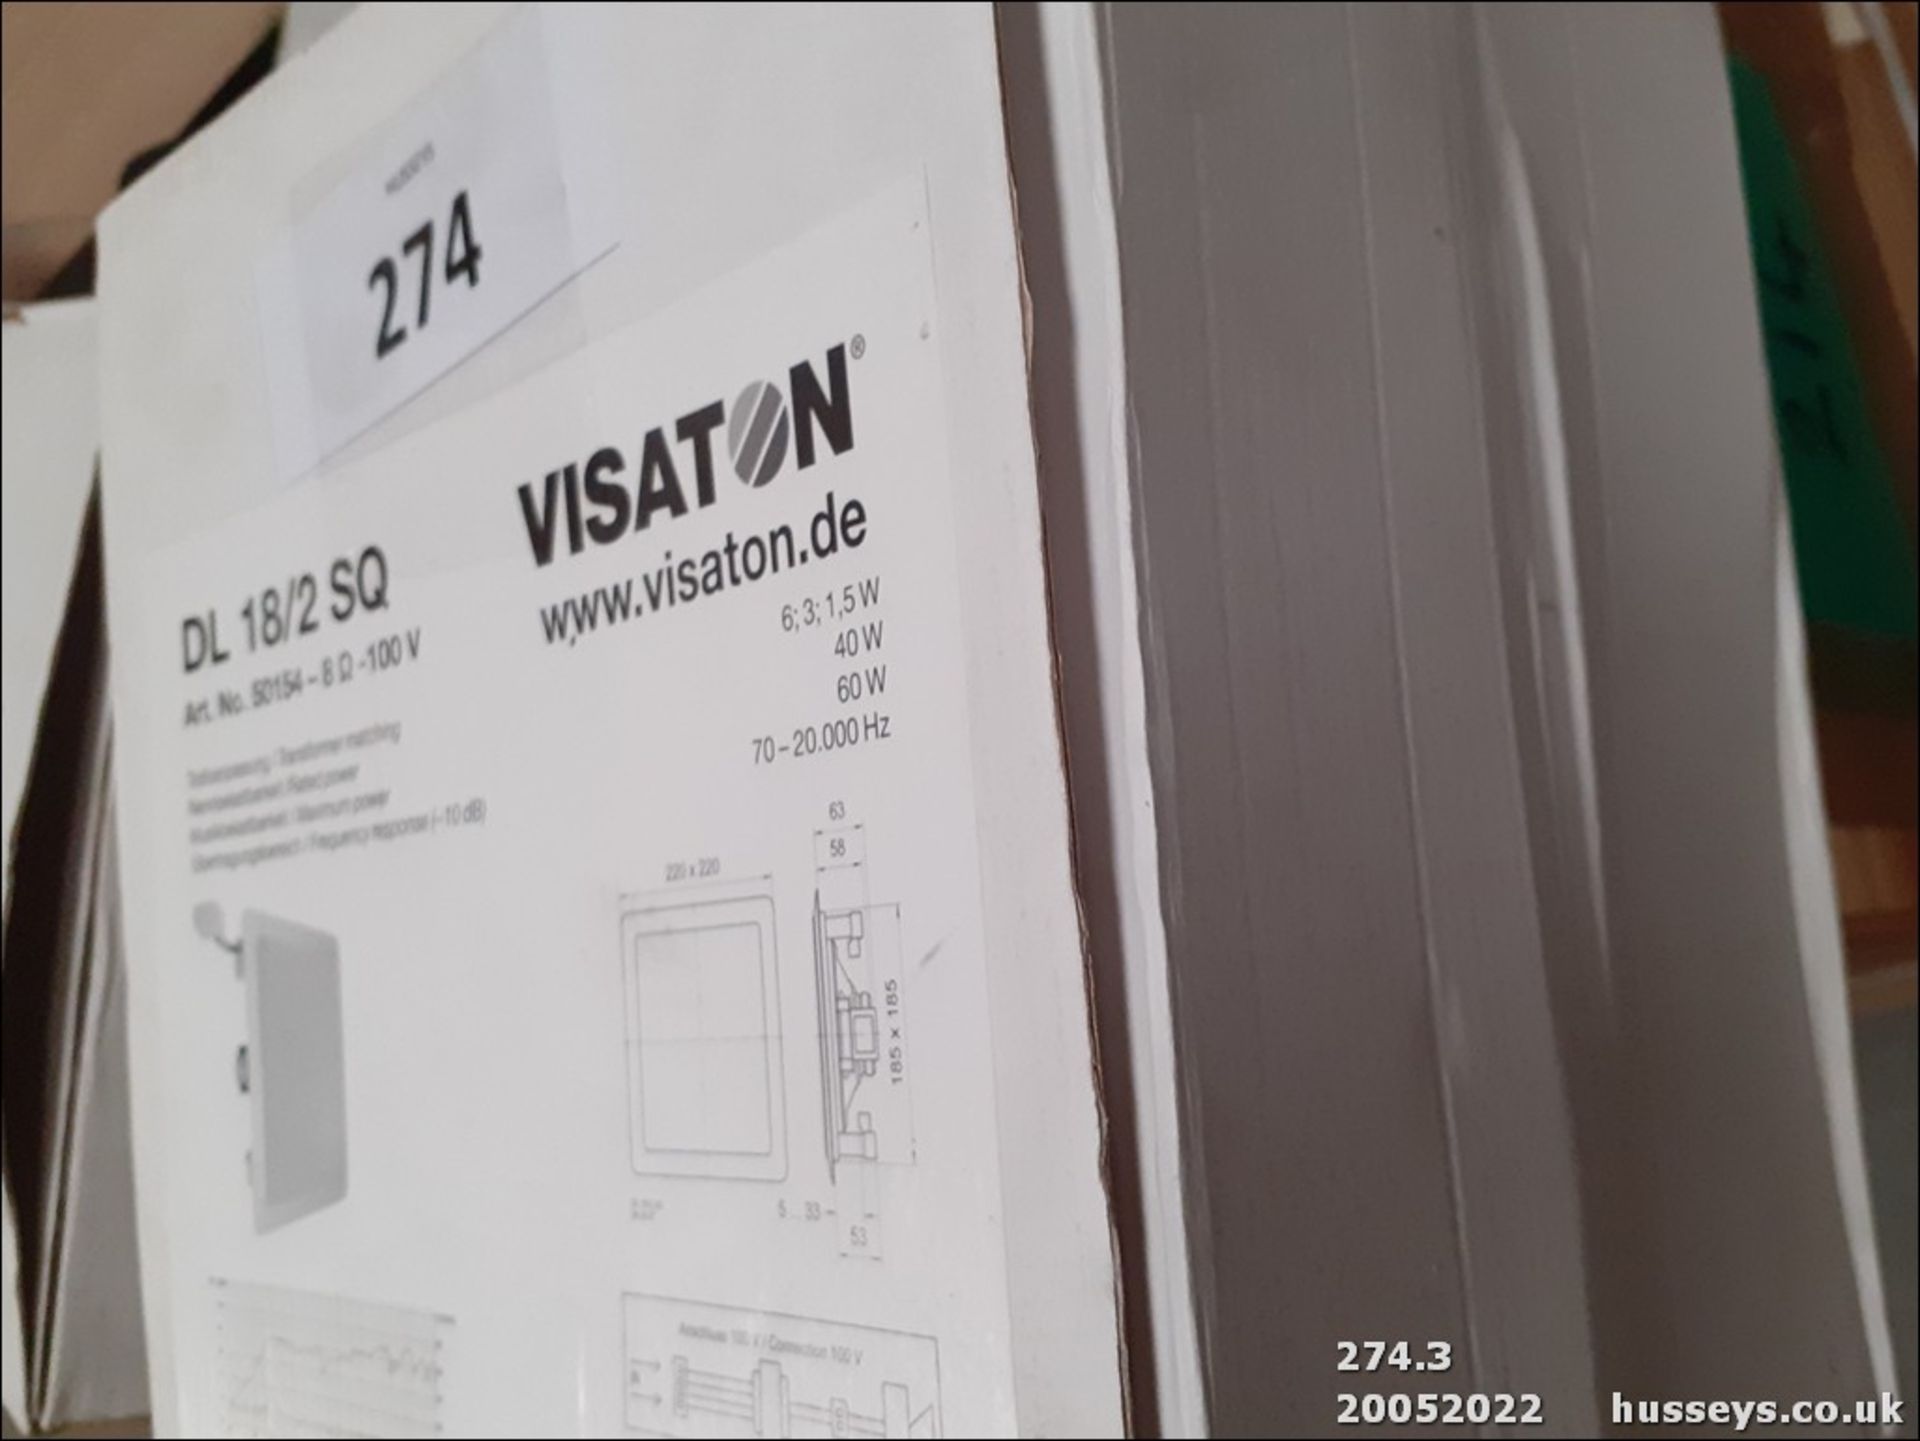 Visaton DL 18/2 SQ Art no. 50154 - 8 - 100V Transformer matching (Qnty: 2) - Image 4 of 4